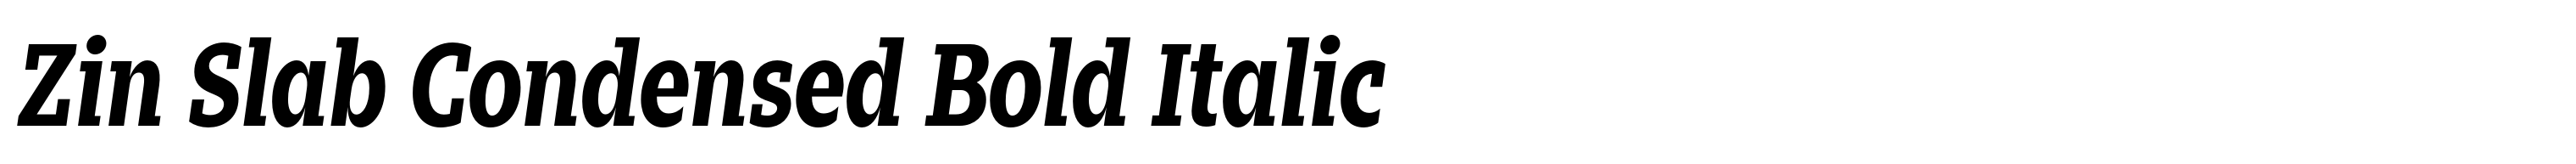 Zin Slab Condensed Bold Italic